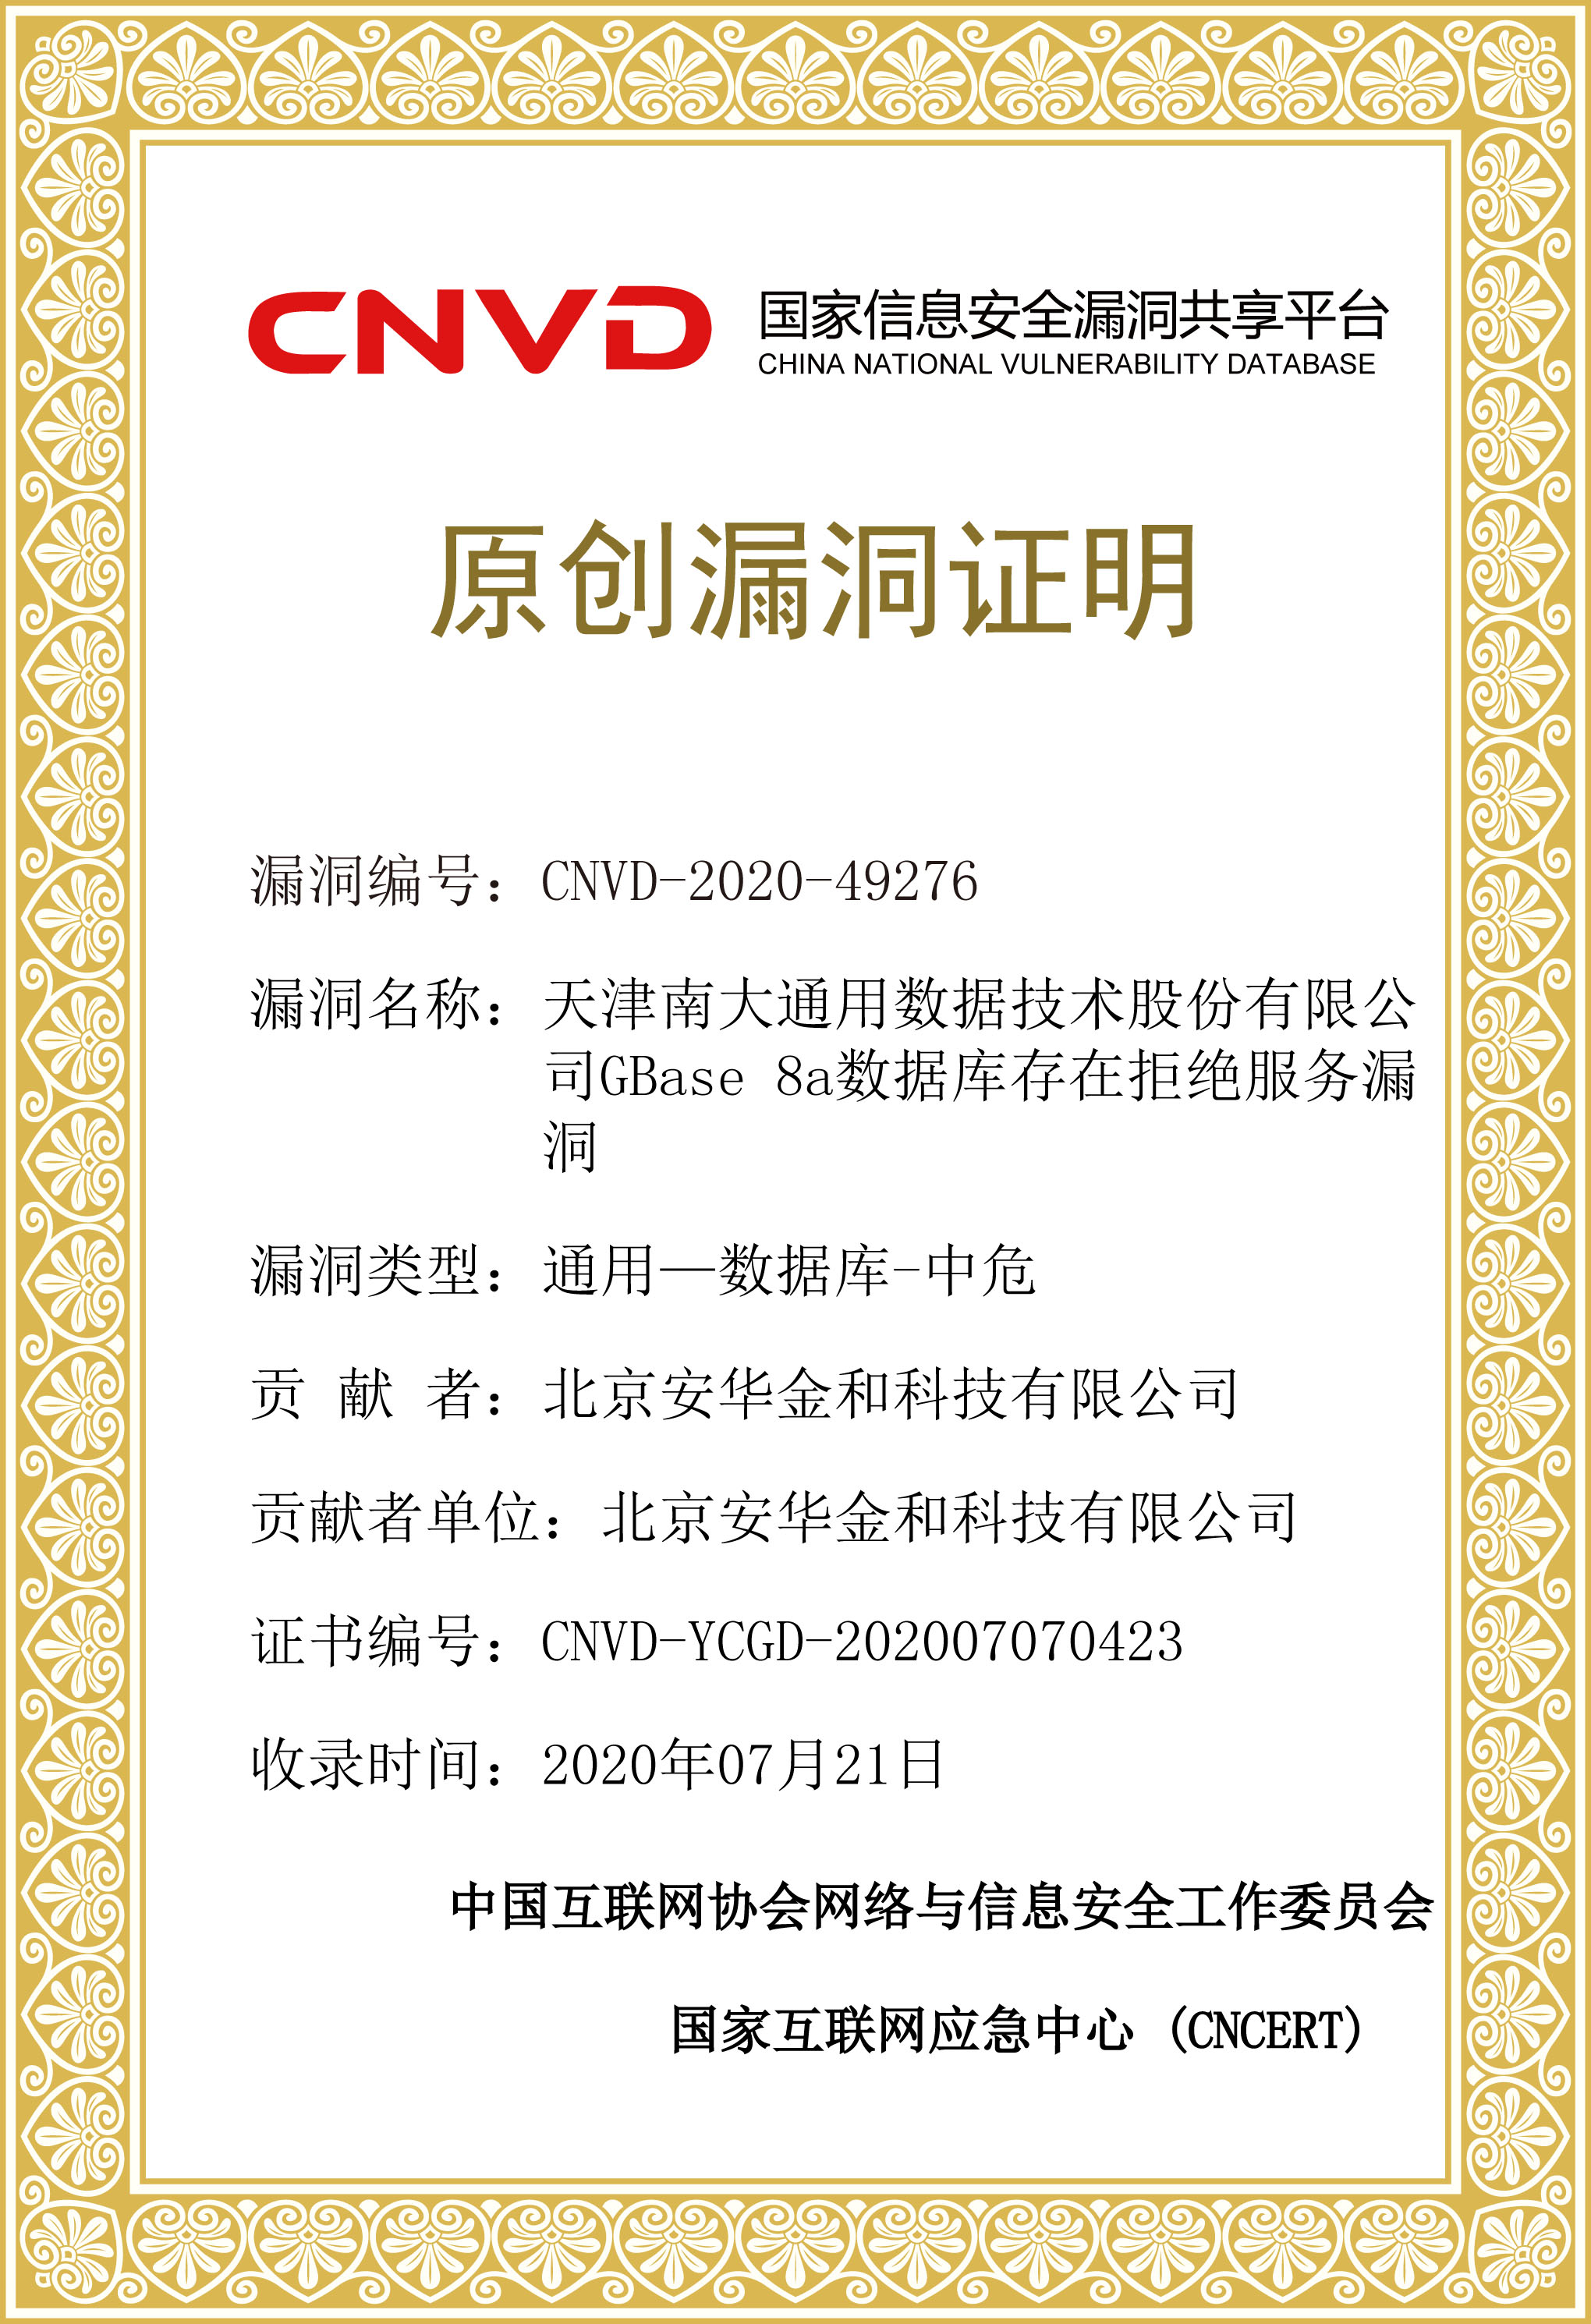 CNVD-YCGD-202007070423